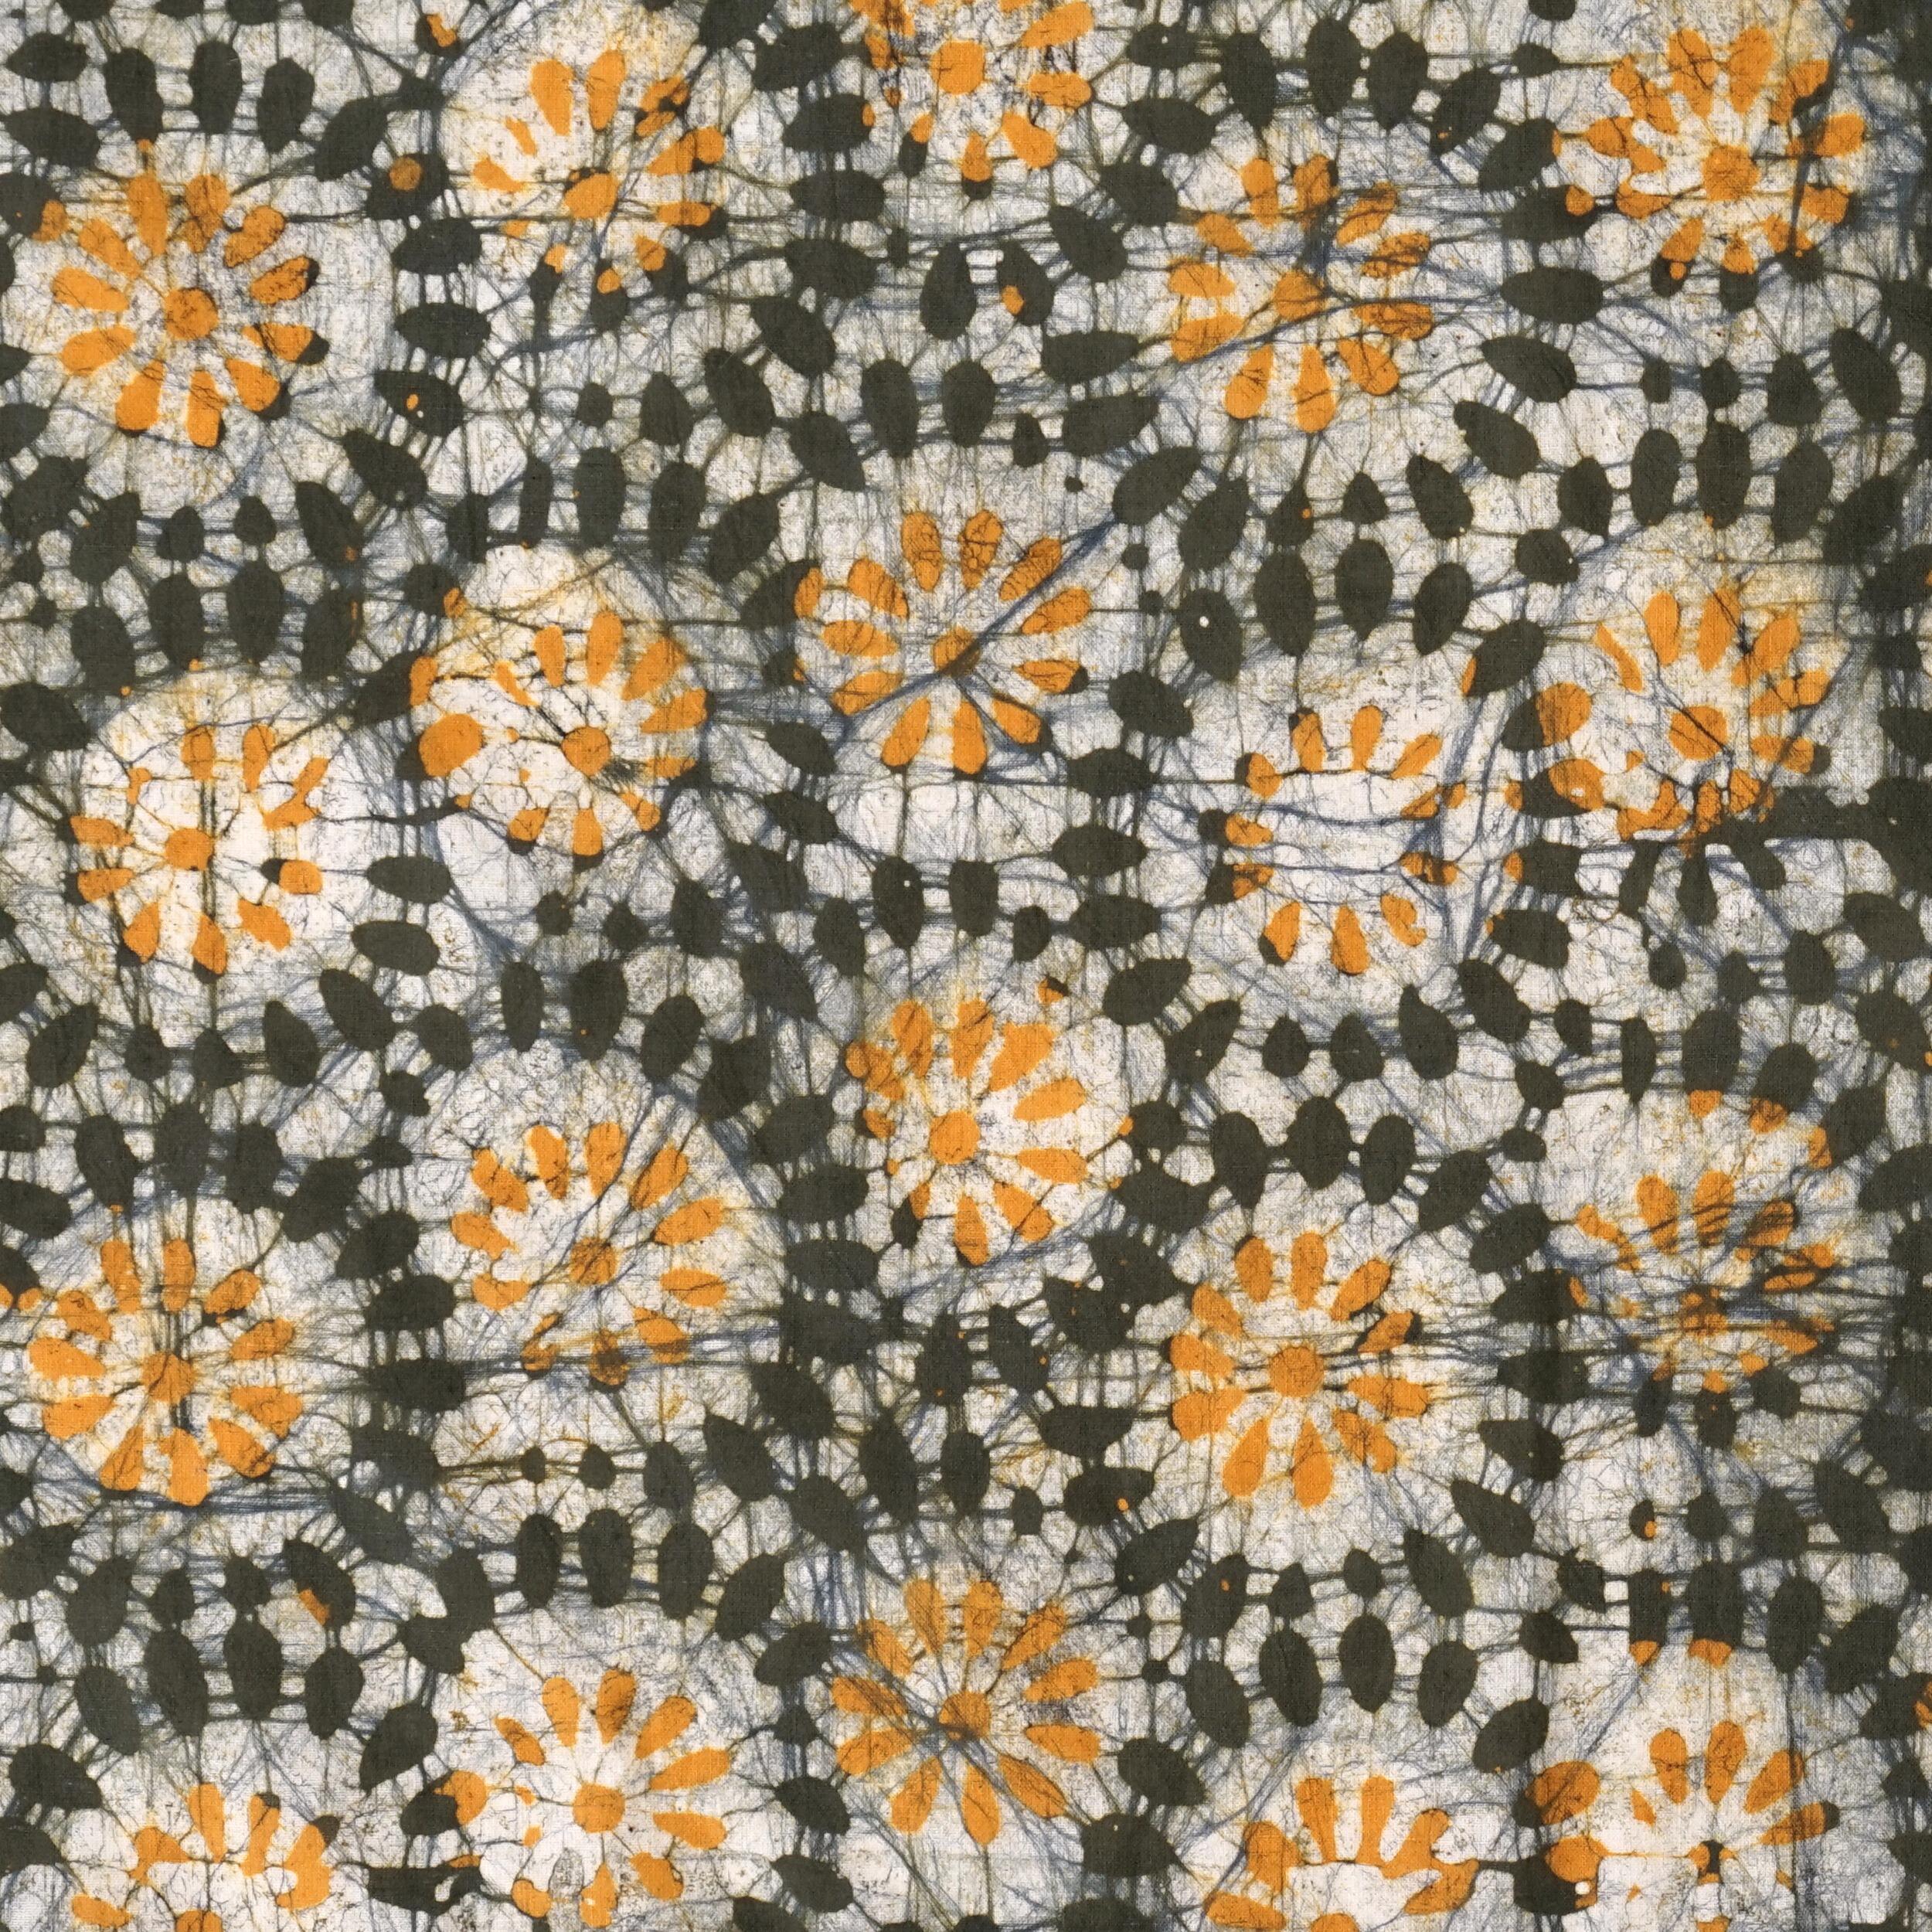 100% Block-Printed Batik Cotton Fabric From India - Jalebi Motif - Flat